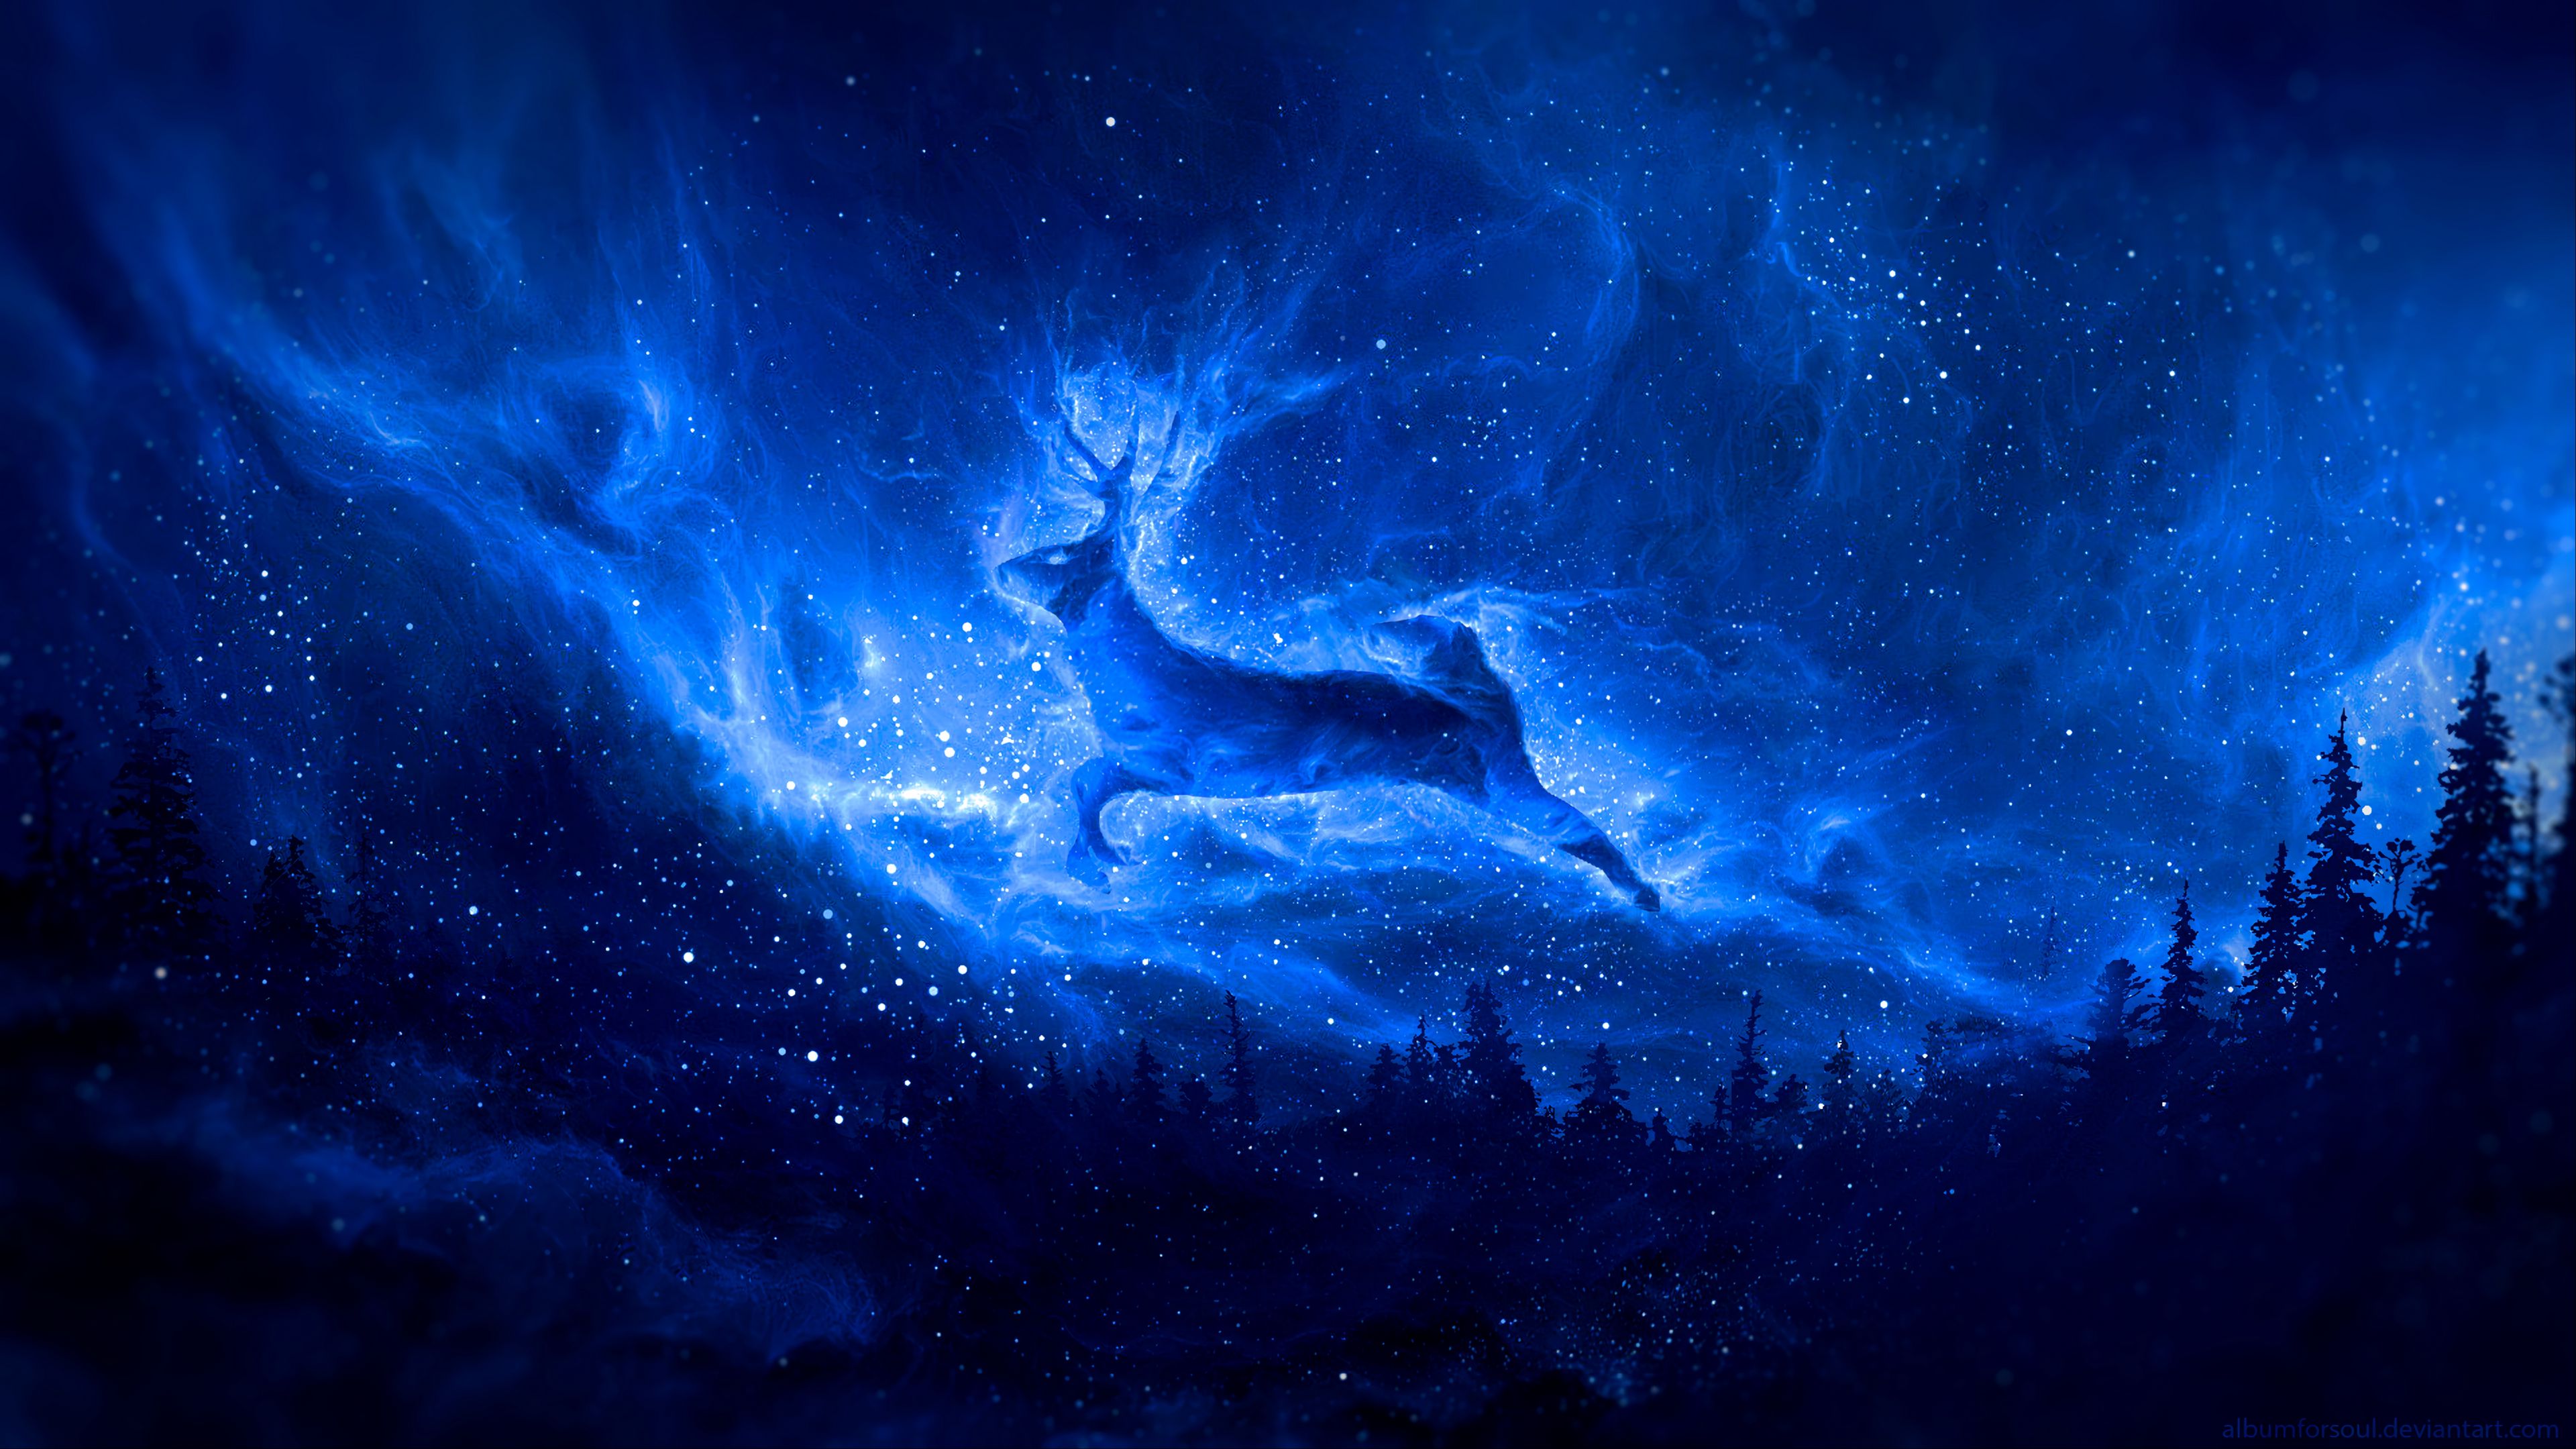 Wallpaper Id Deer Silhouette Starry Sky Art Fantasy